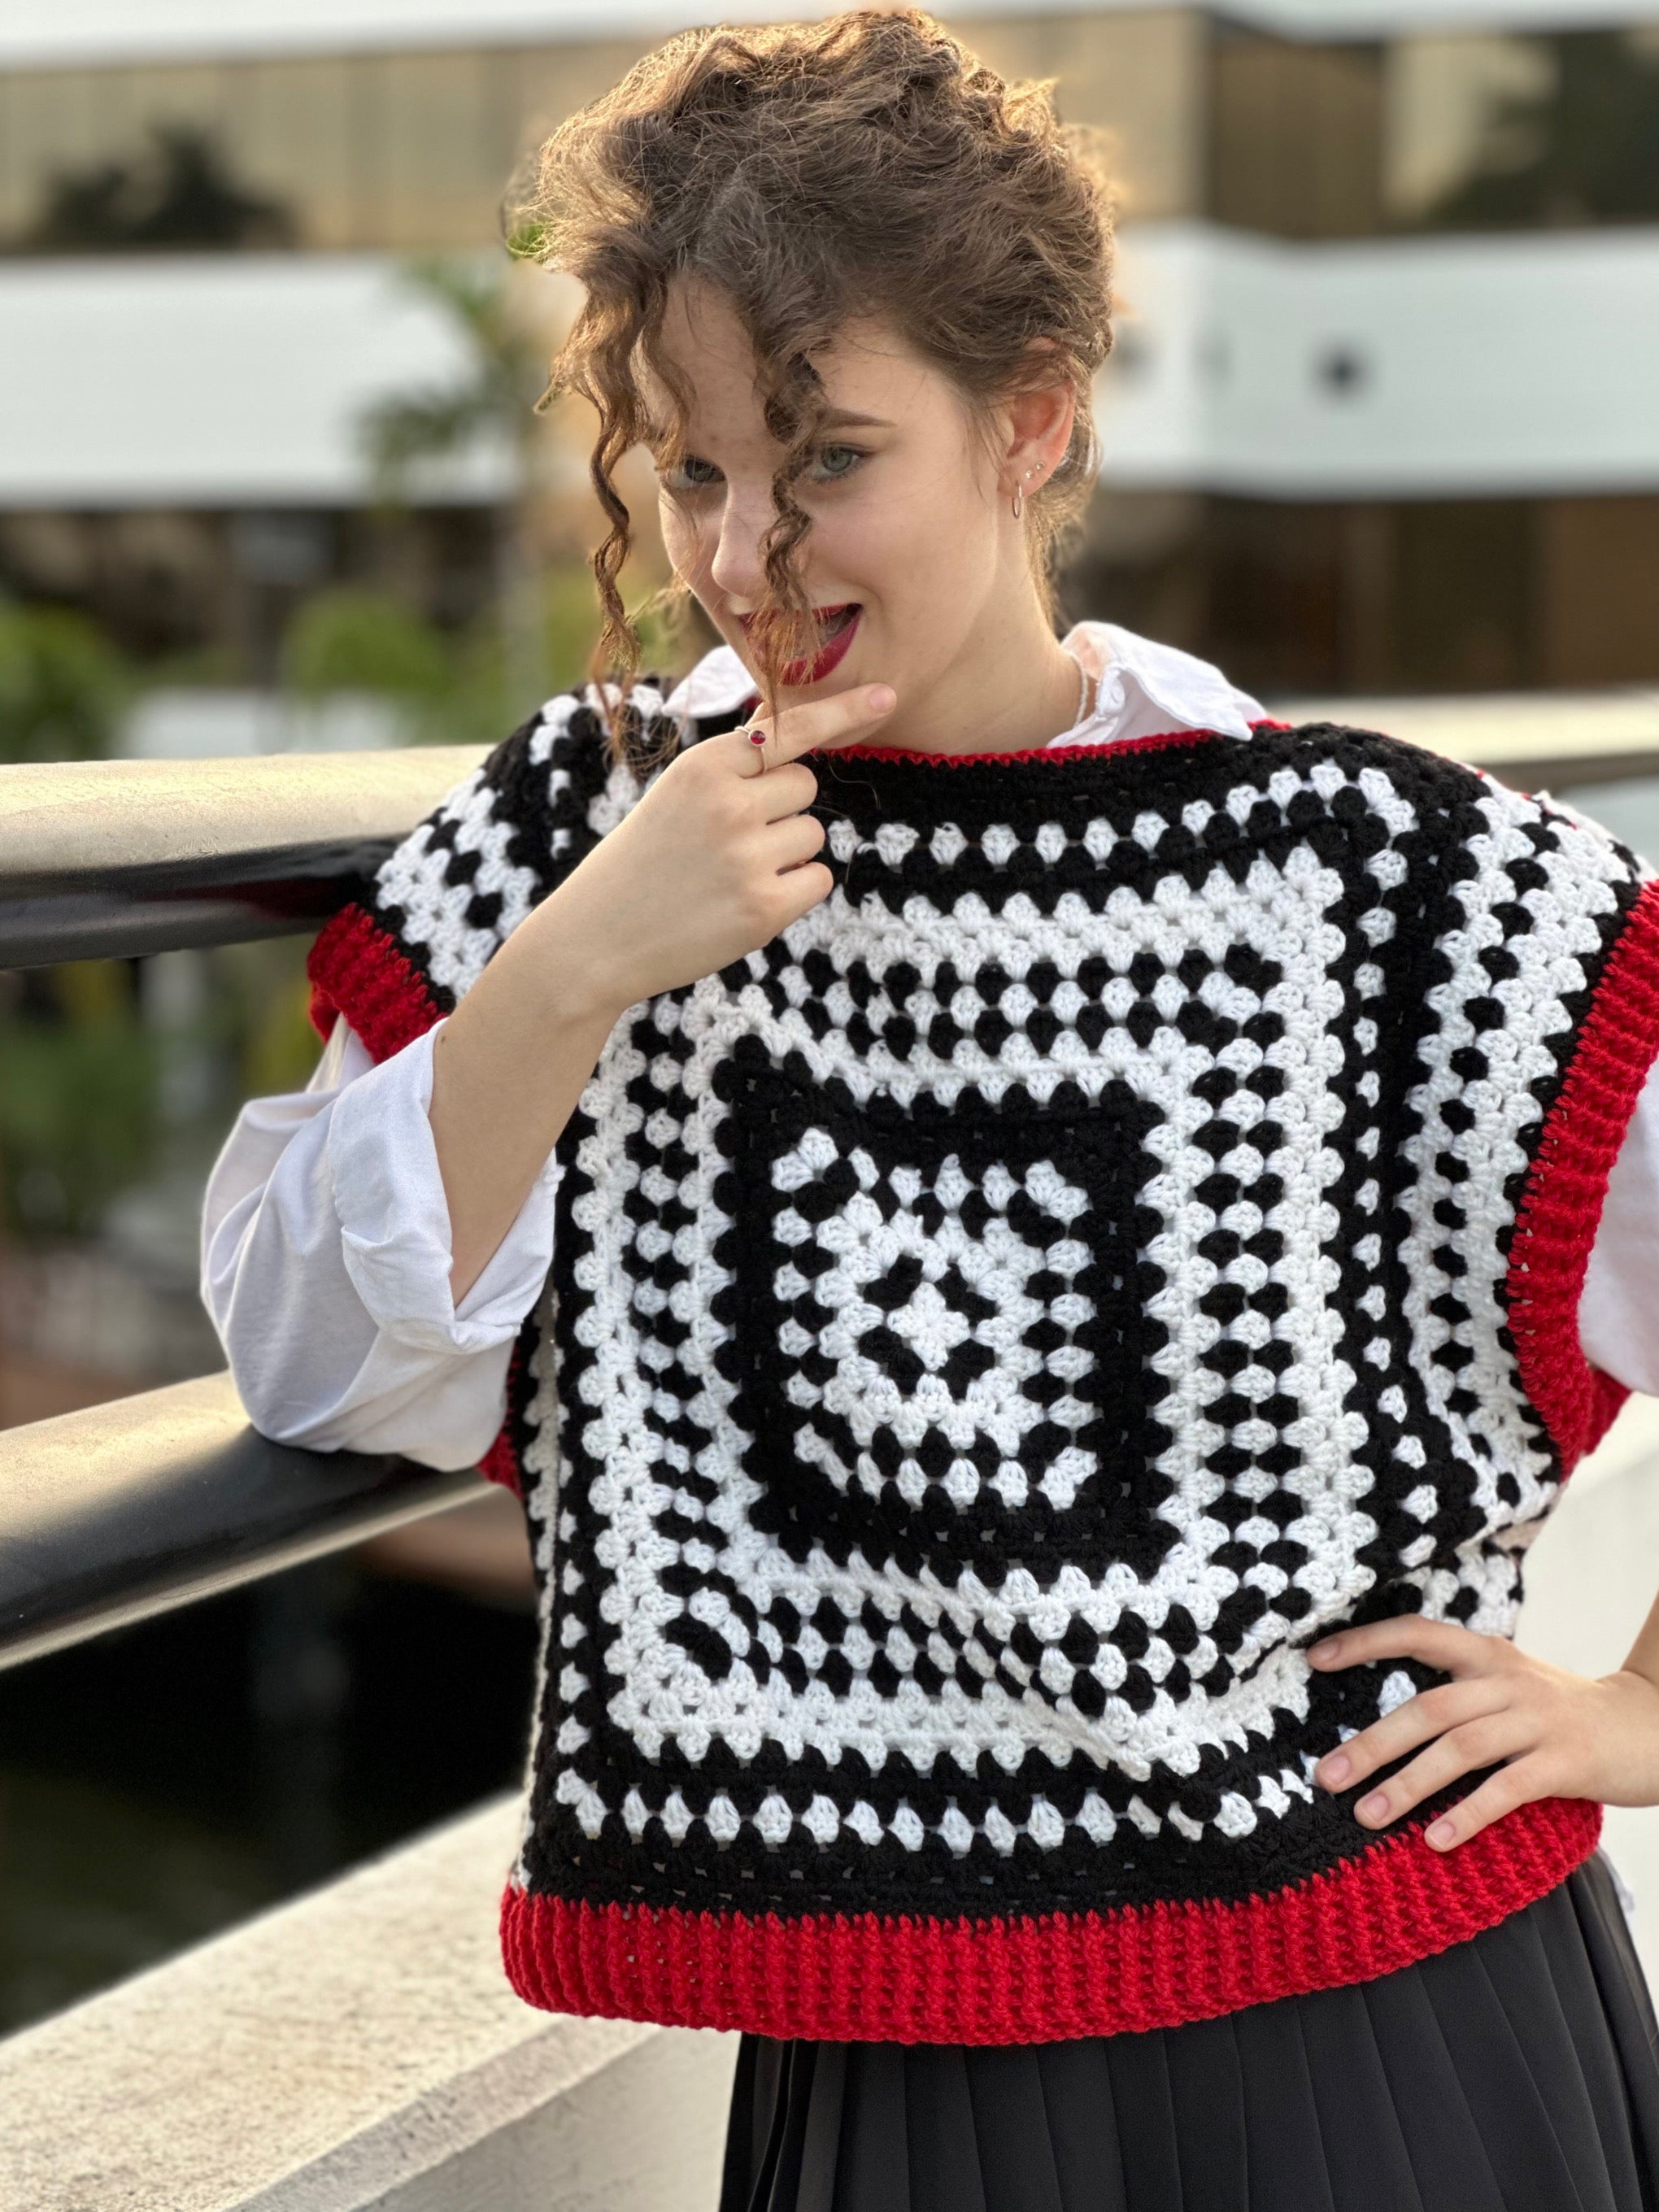 4 Crochet Patterns "B" (instant download)